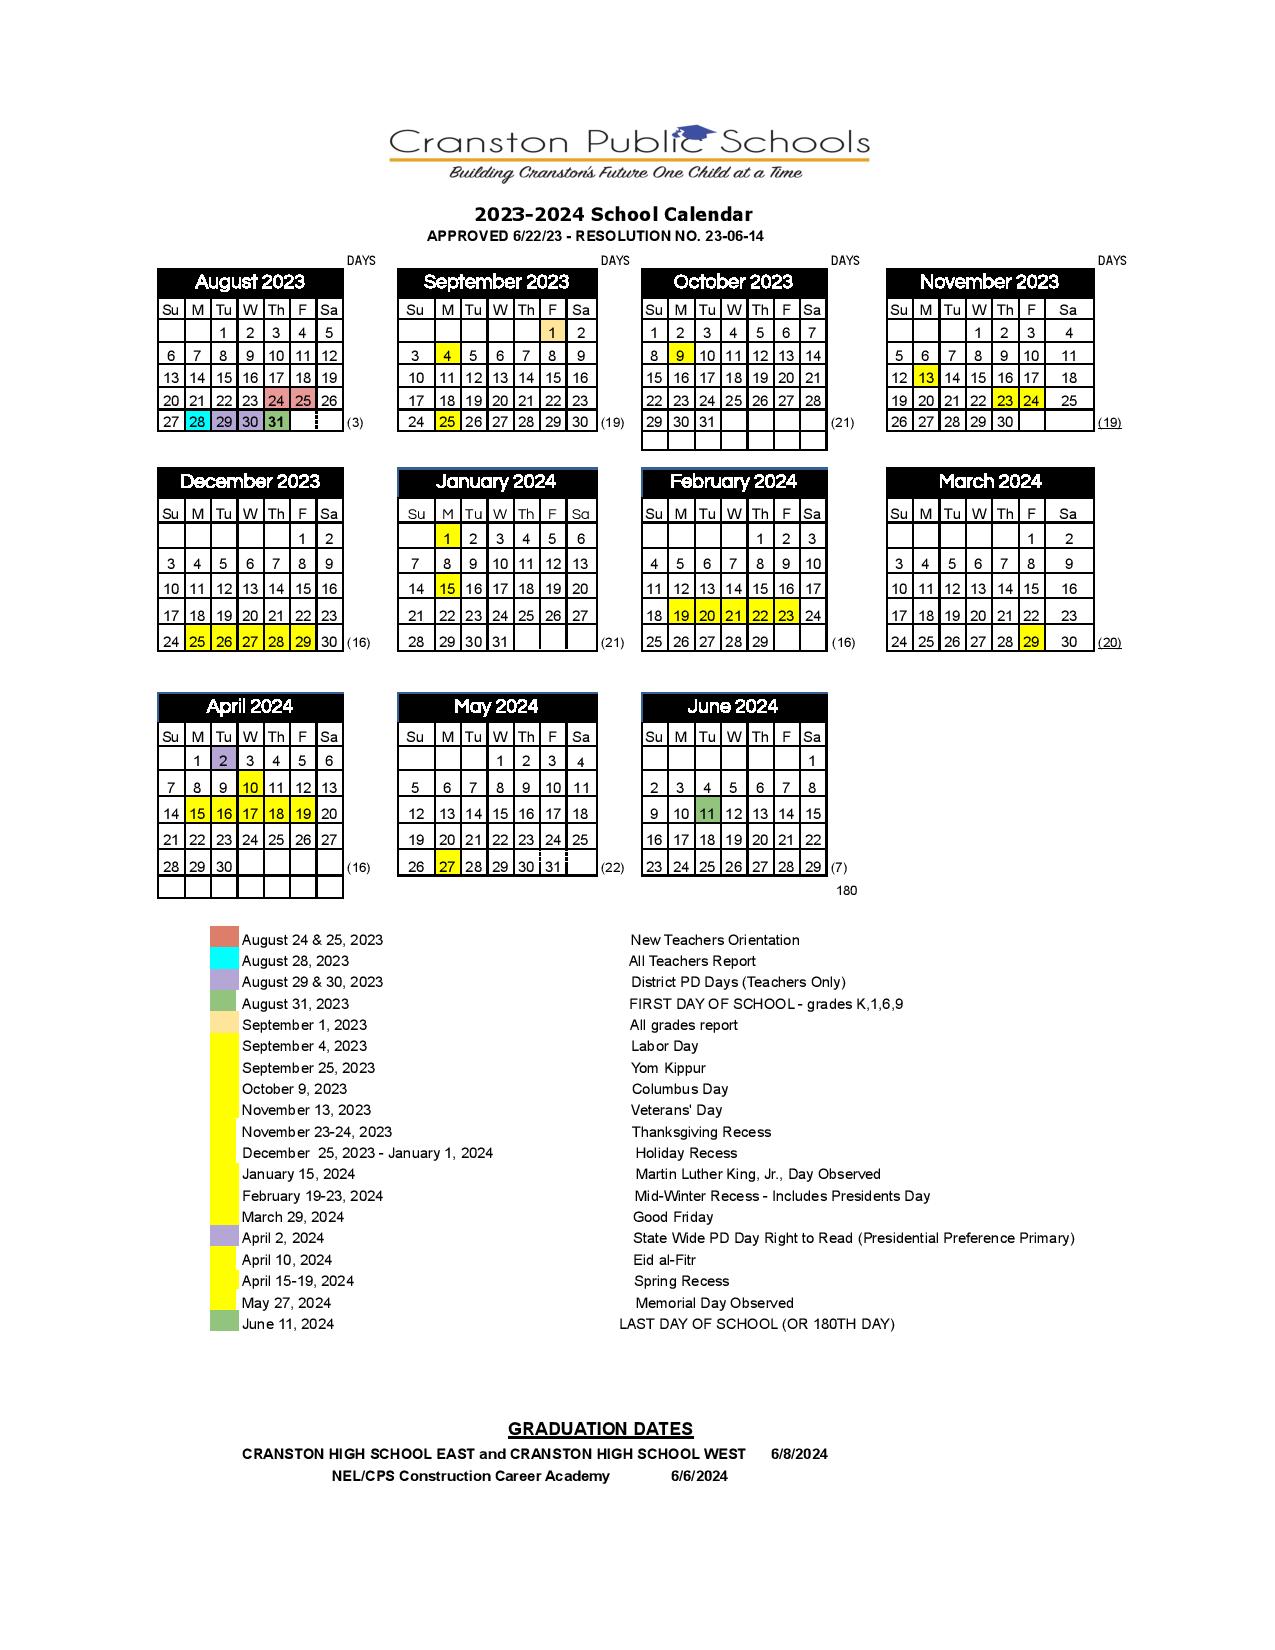 Cranston Public Schools Calendar 2023 2024 in PDF